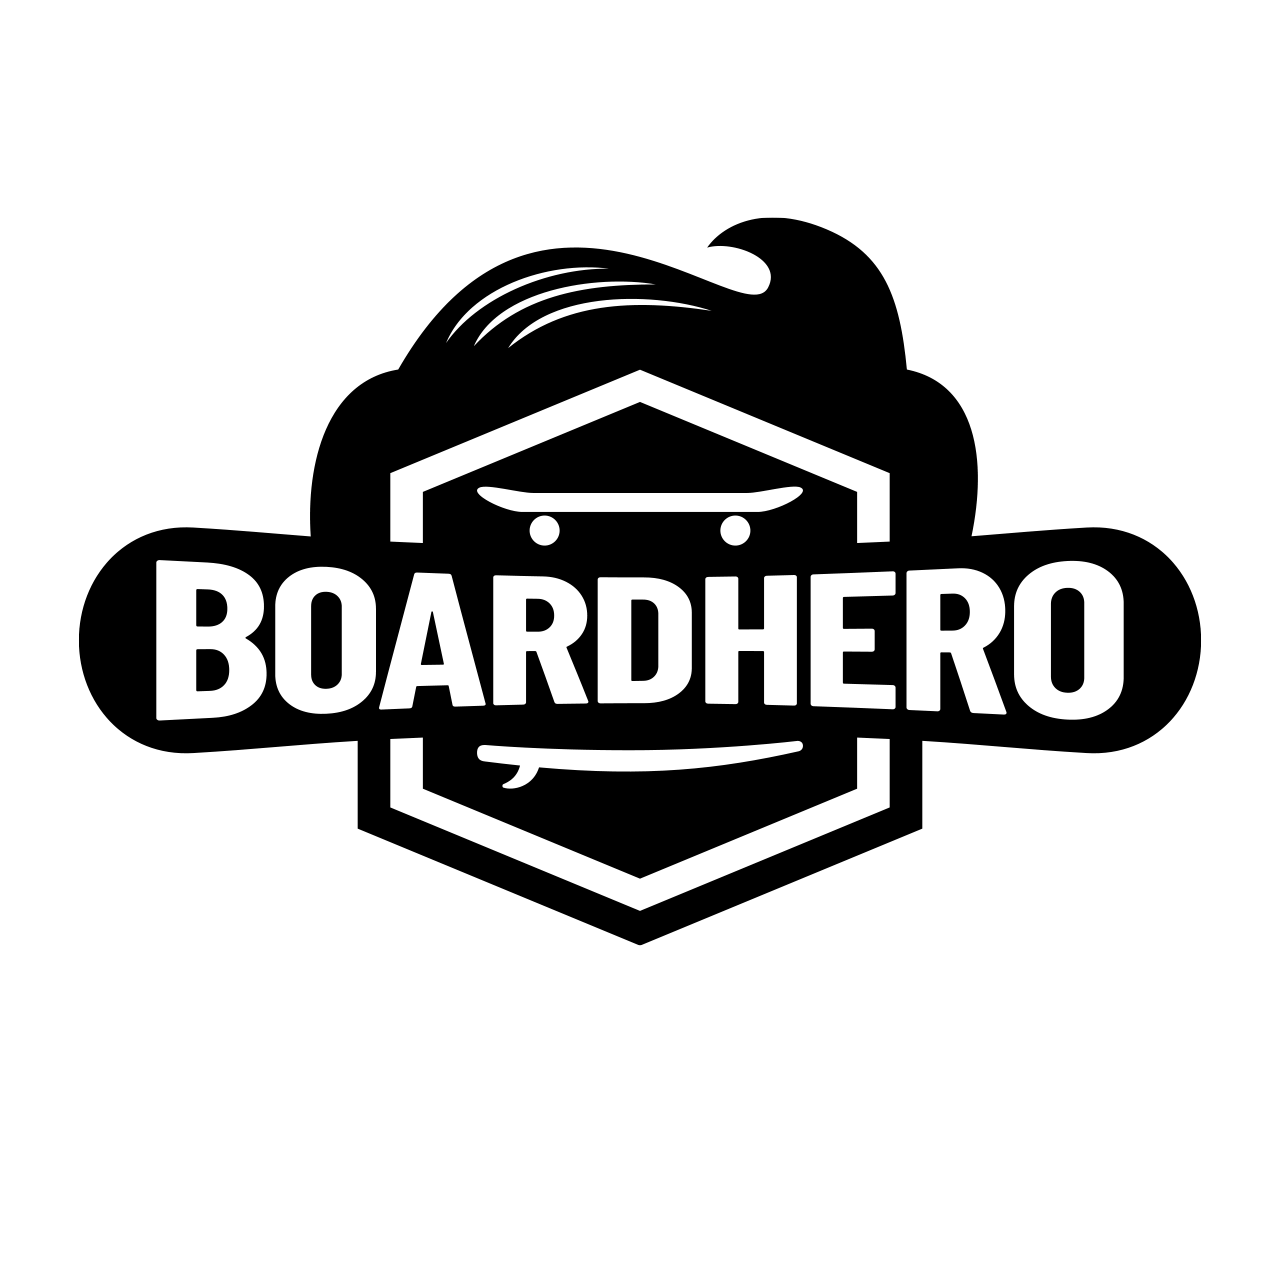 logo board hero